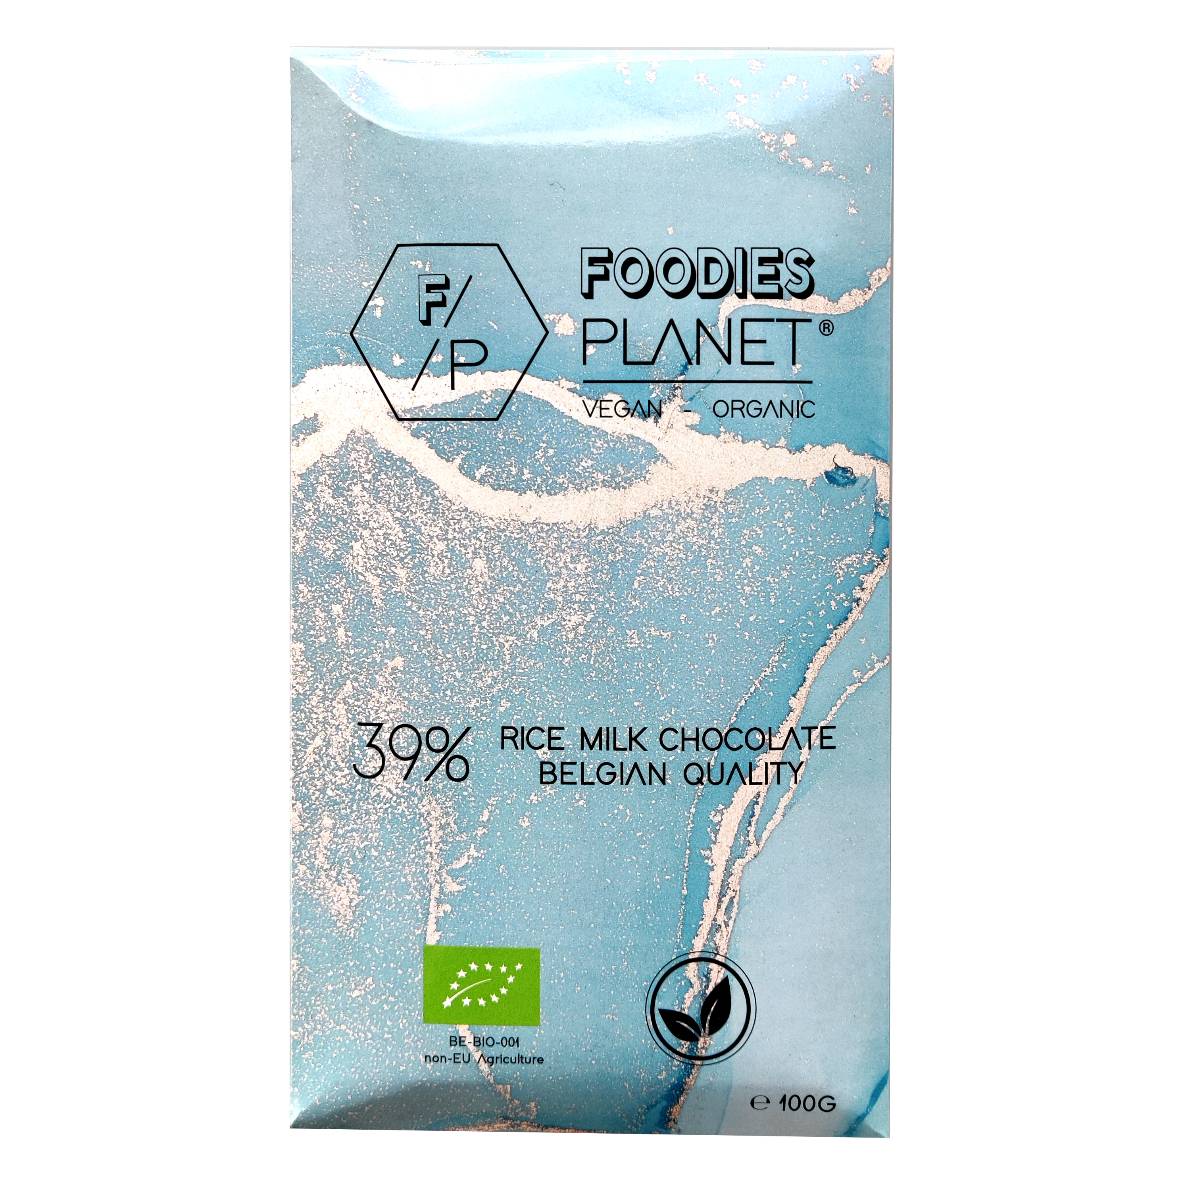 39% Rice milk chocolate 100 g